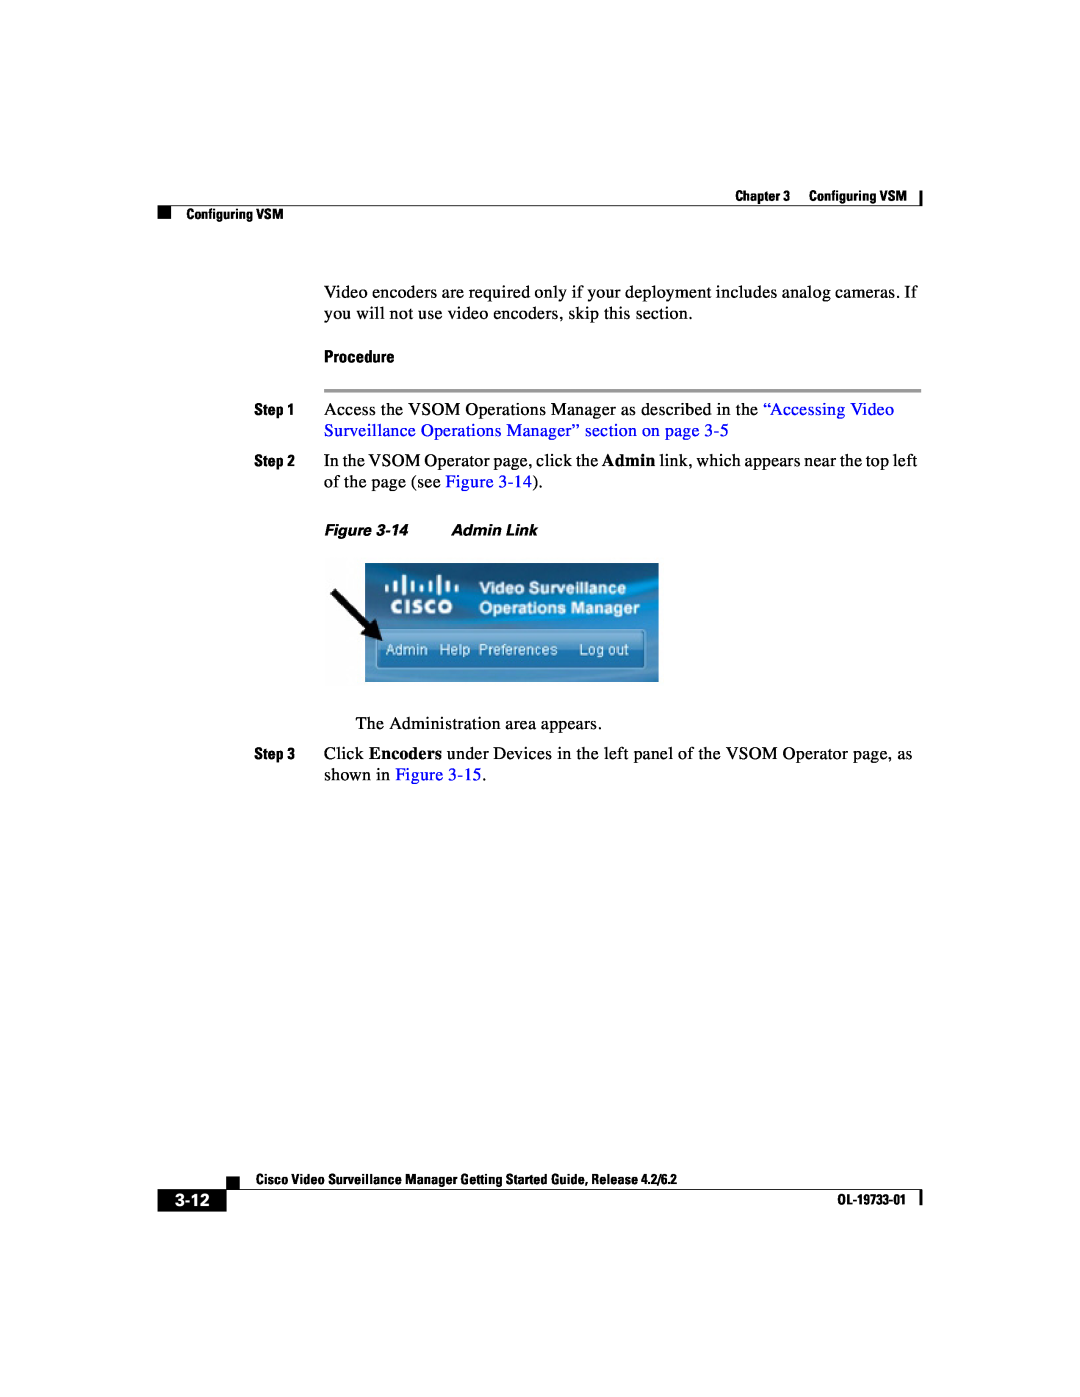 Cisco Systems Release 4.2 manual Procedure, 3-12 